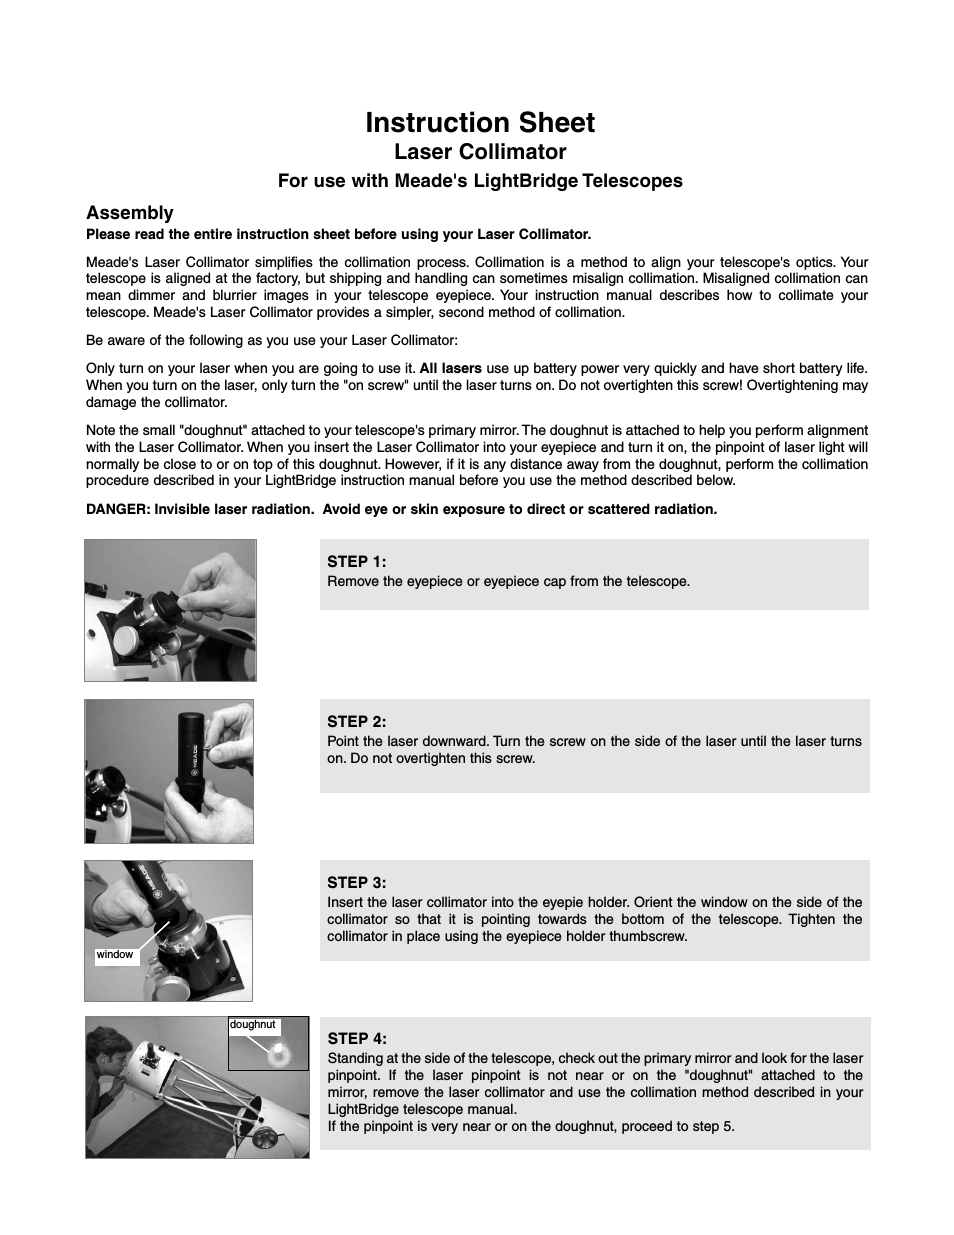 LightBridge Laser Collimator Instructions